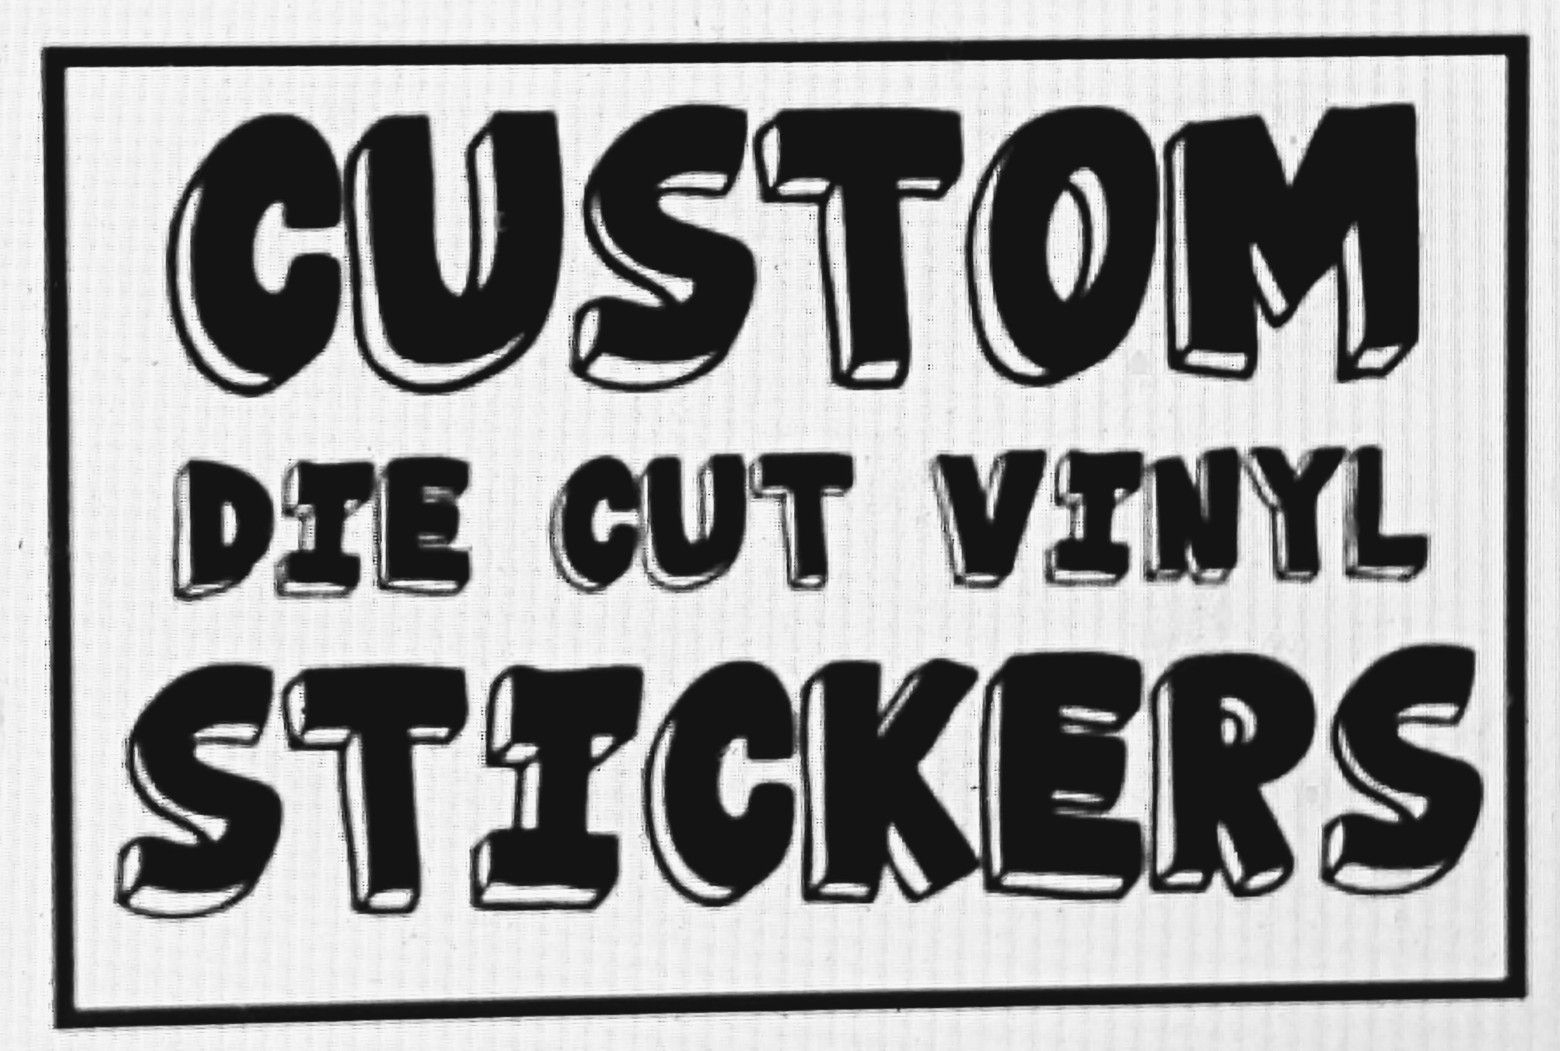 Custom vinyl stickers decals die cut sizes colors bulk fast band sports company logo wedding .com kids car window